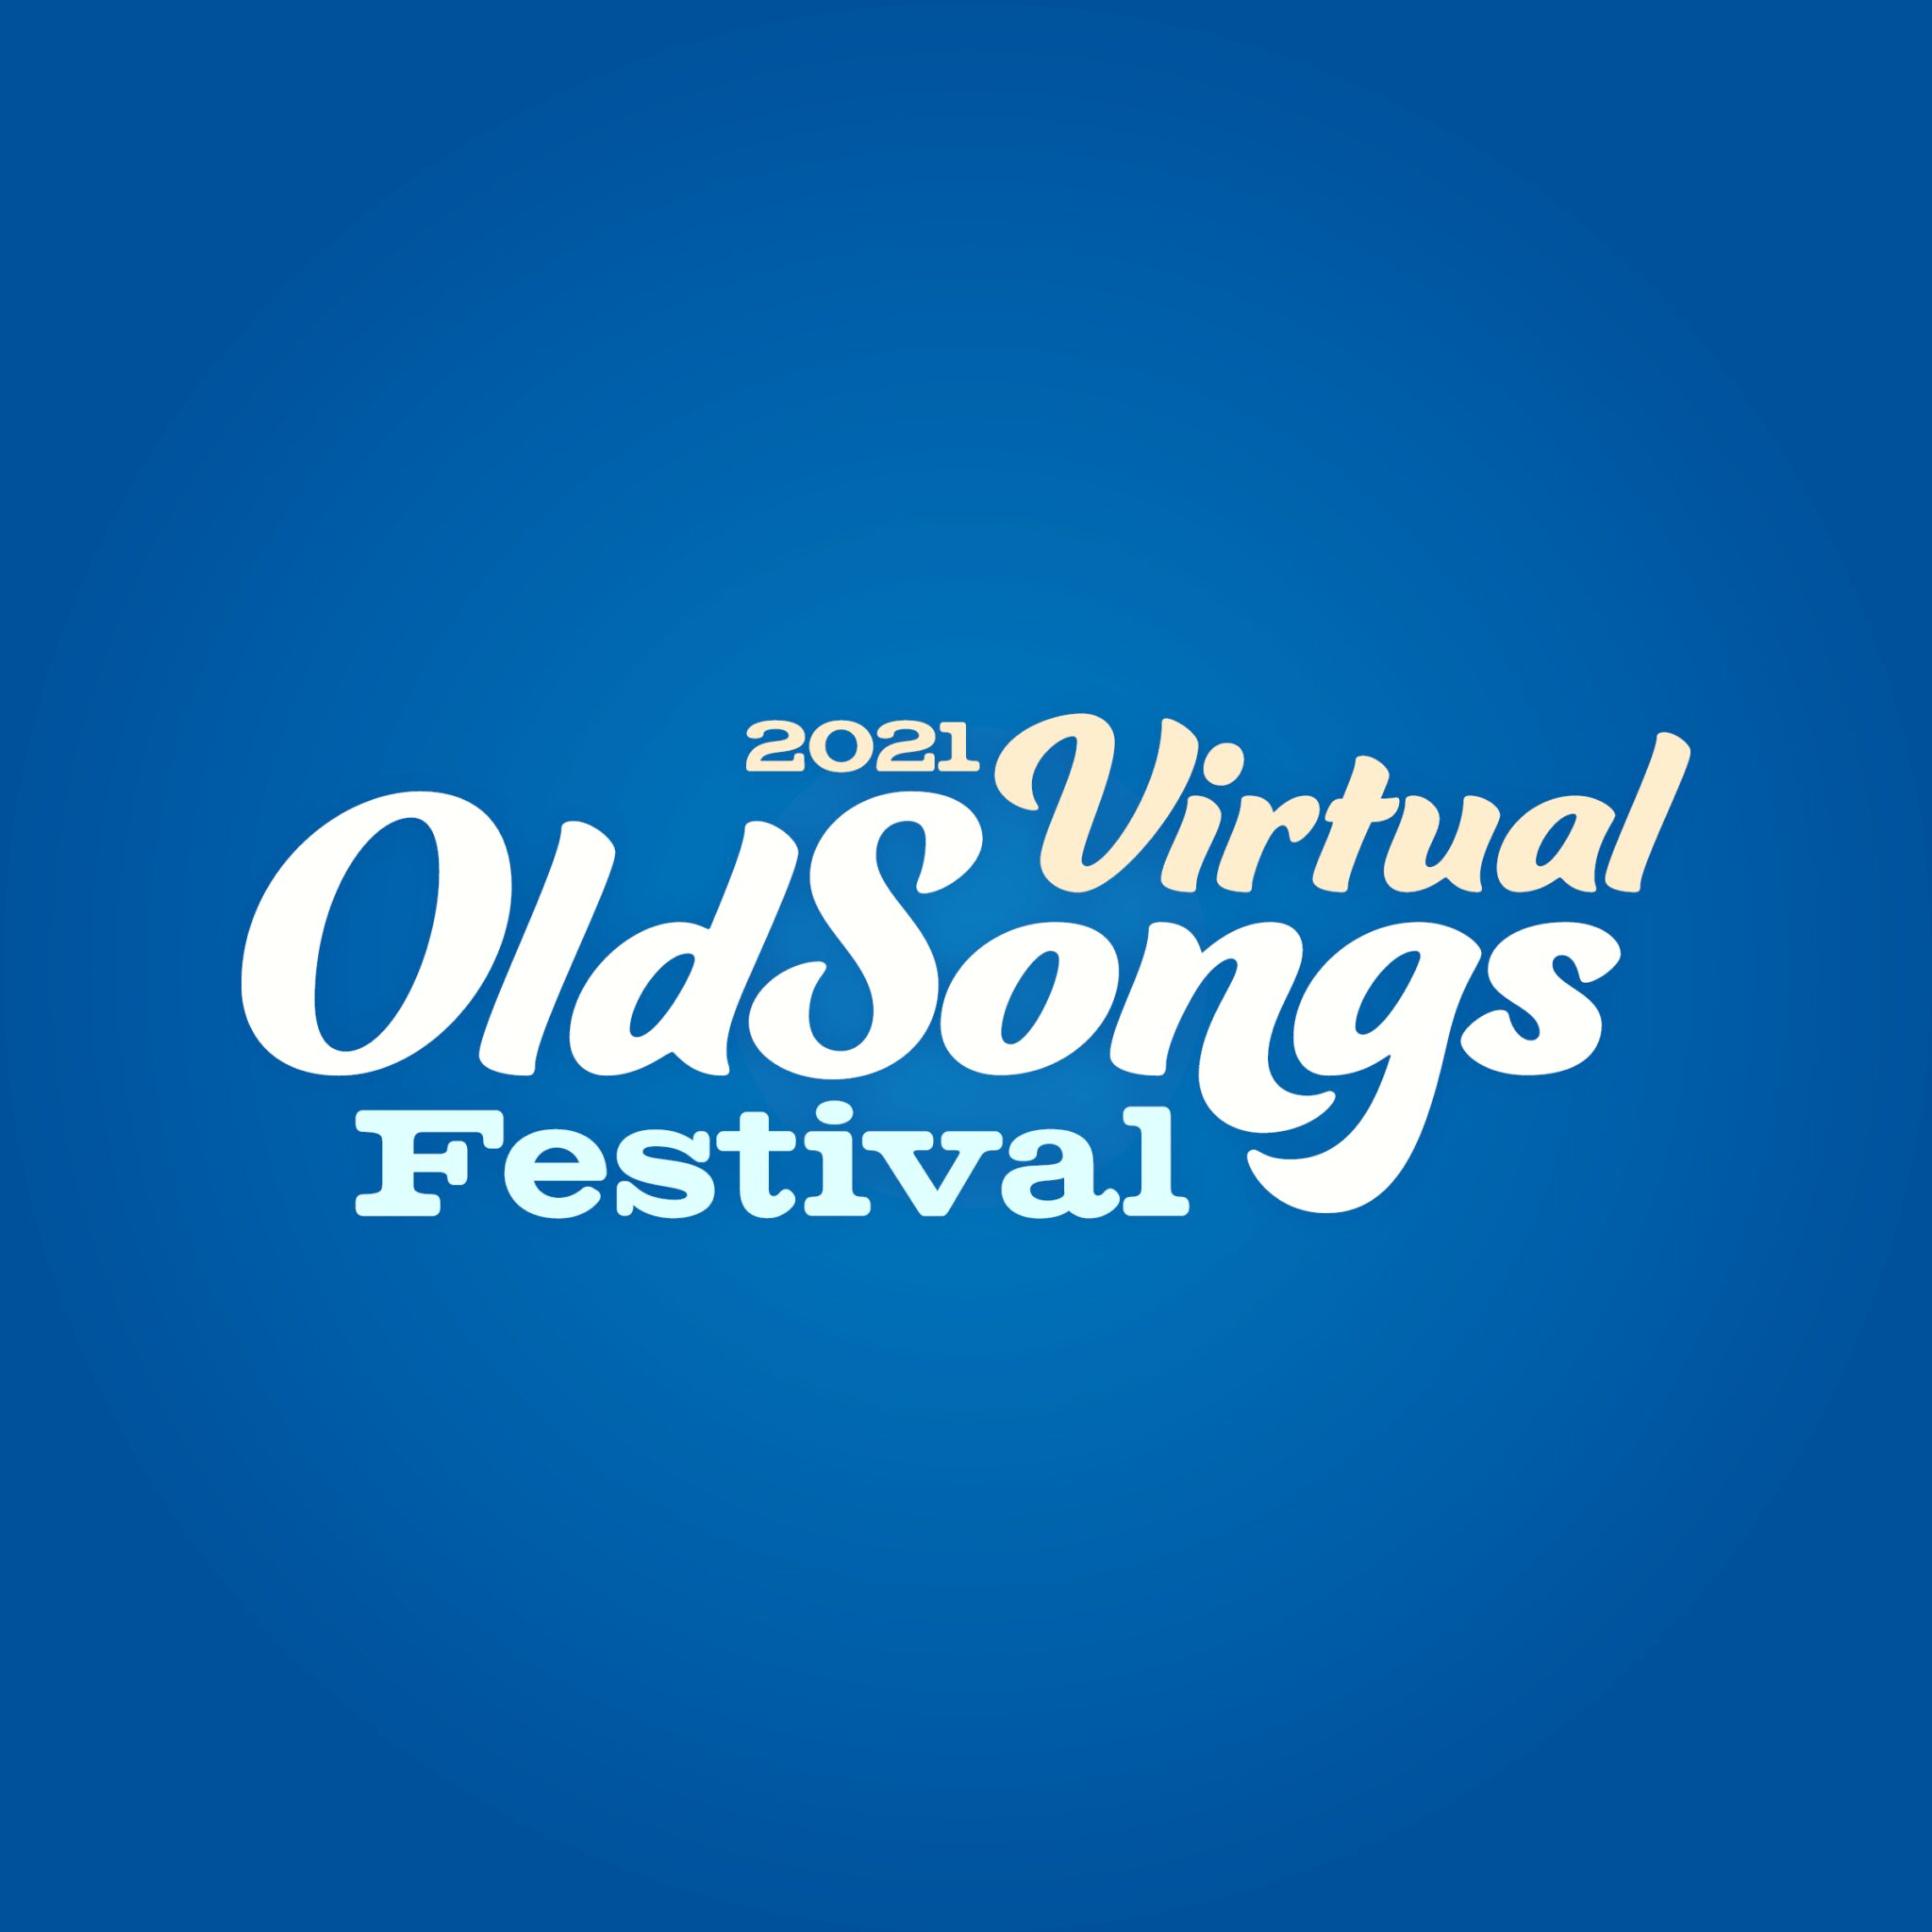 old songs festival